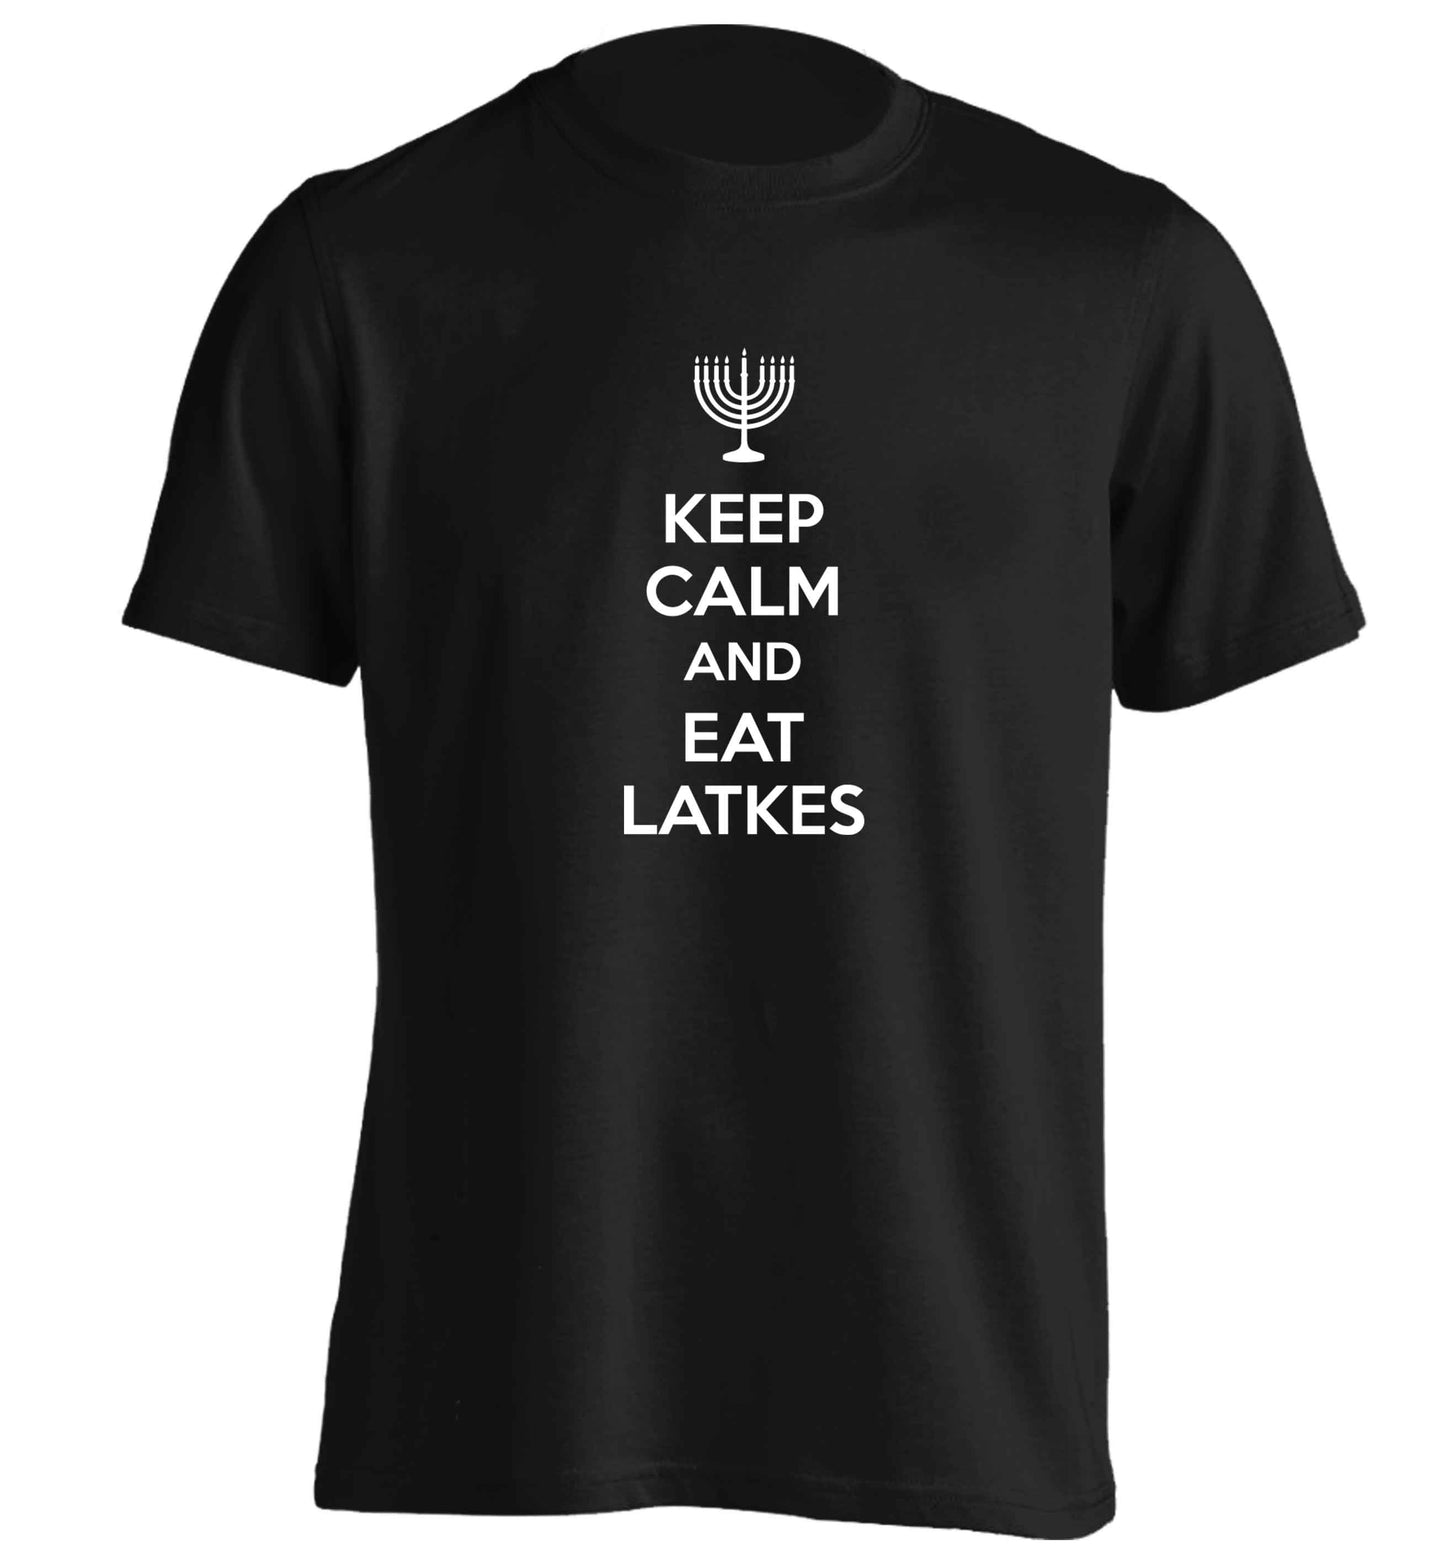 Keep calm and eat latkes adults unisex black Tshirt 2XL